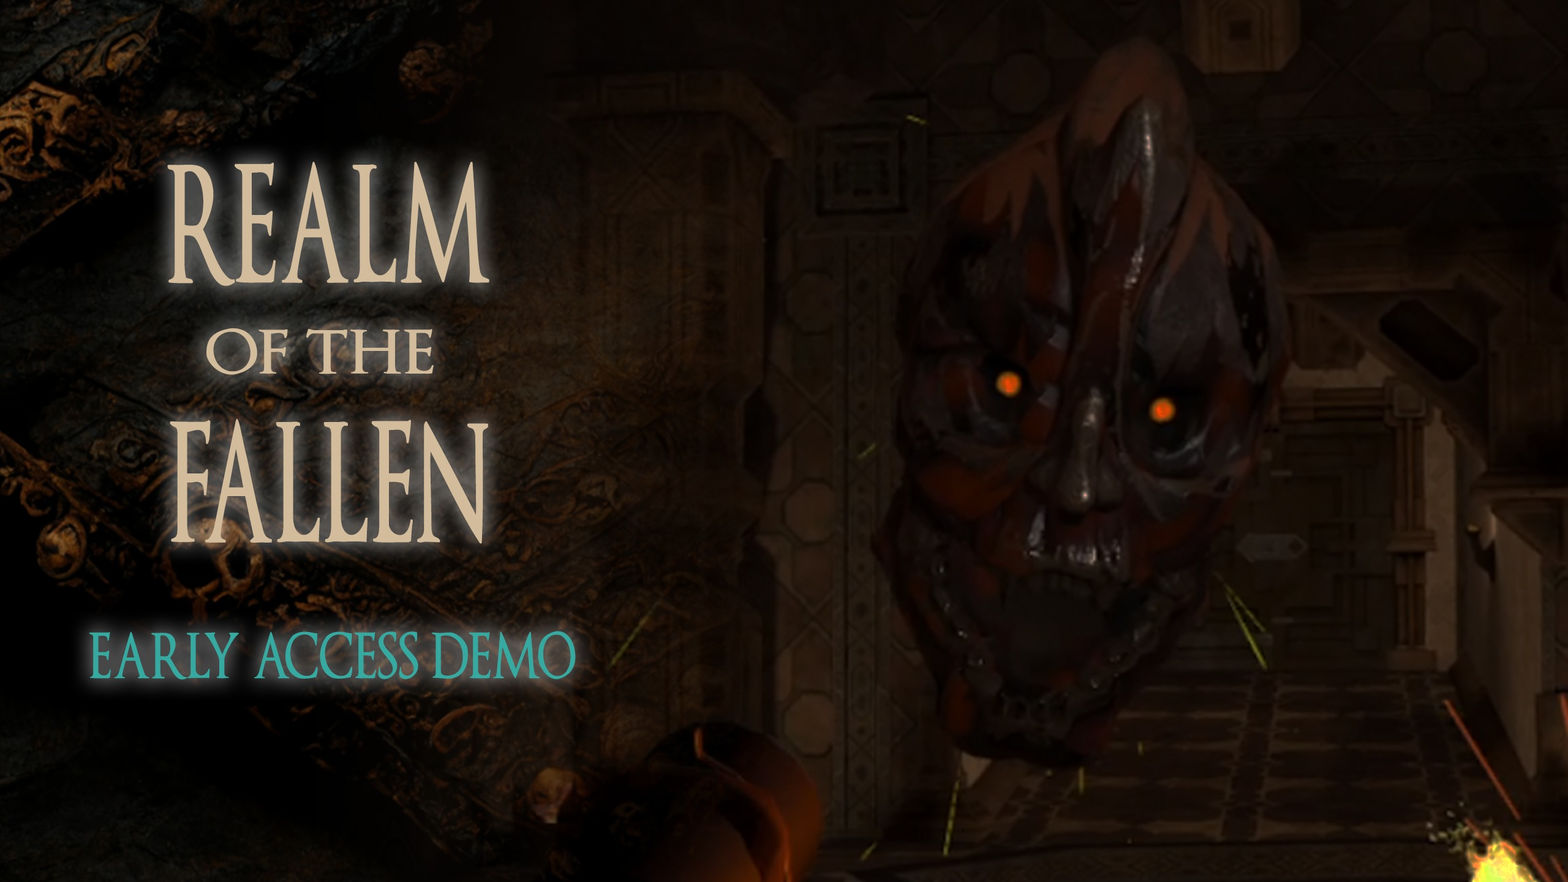 Realm of the Fallen: Demo